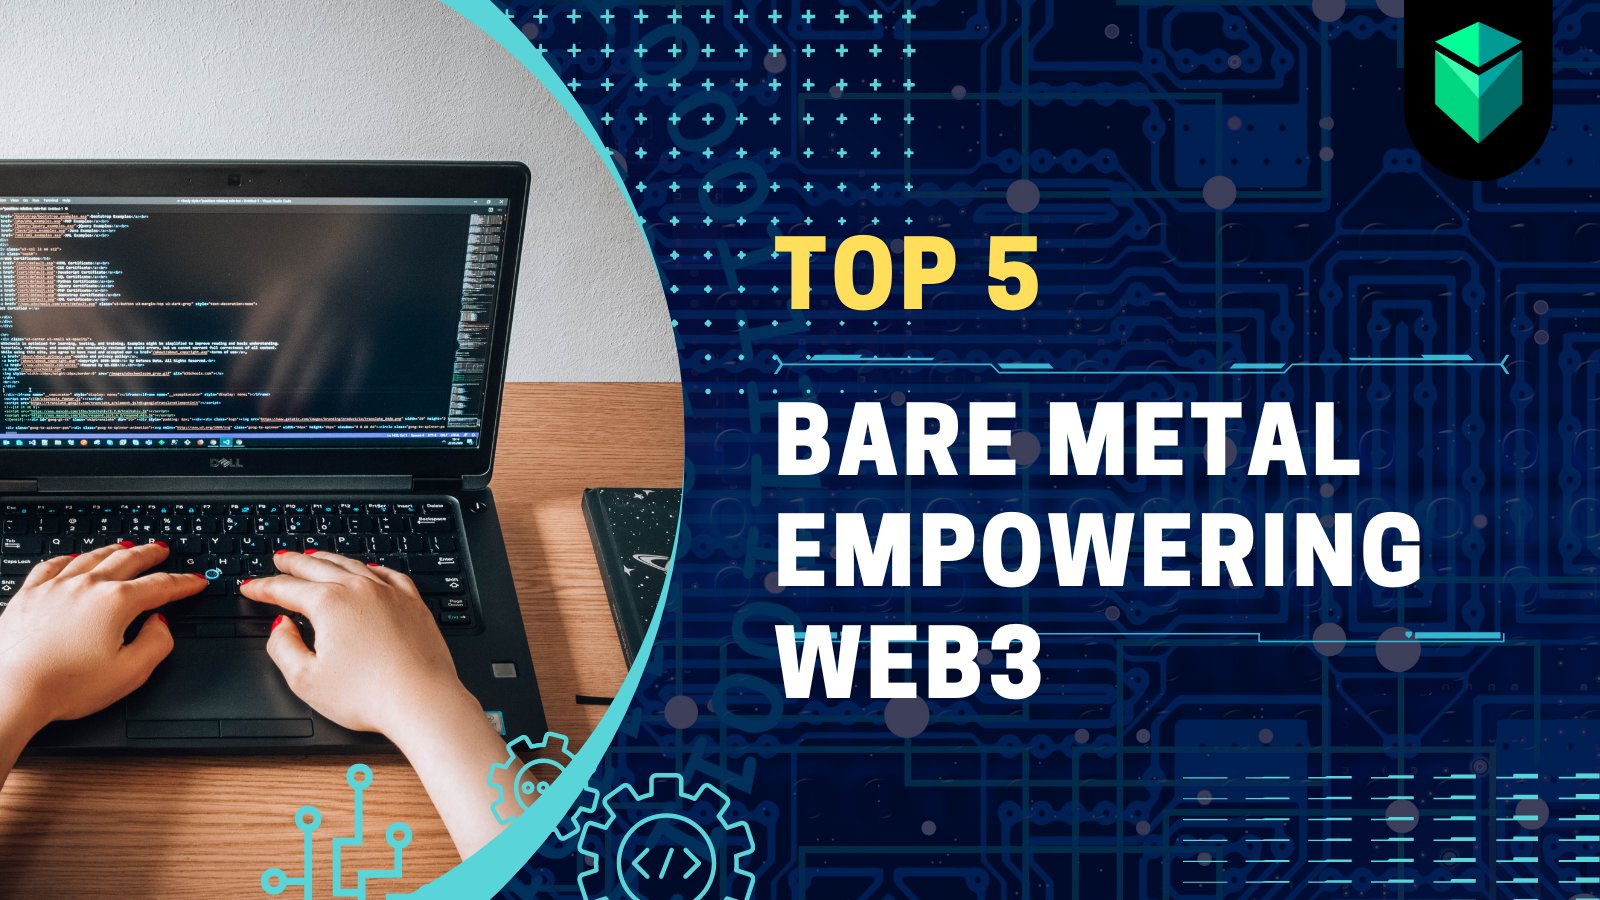 top 5 bare metal empowering web3 companies